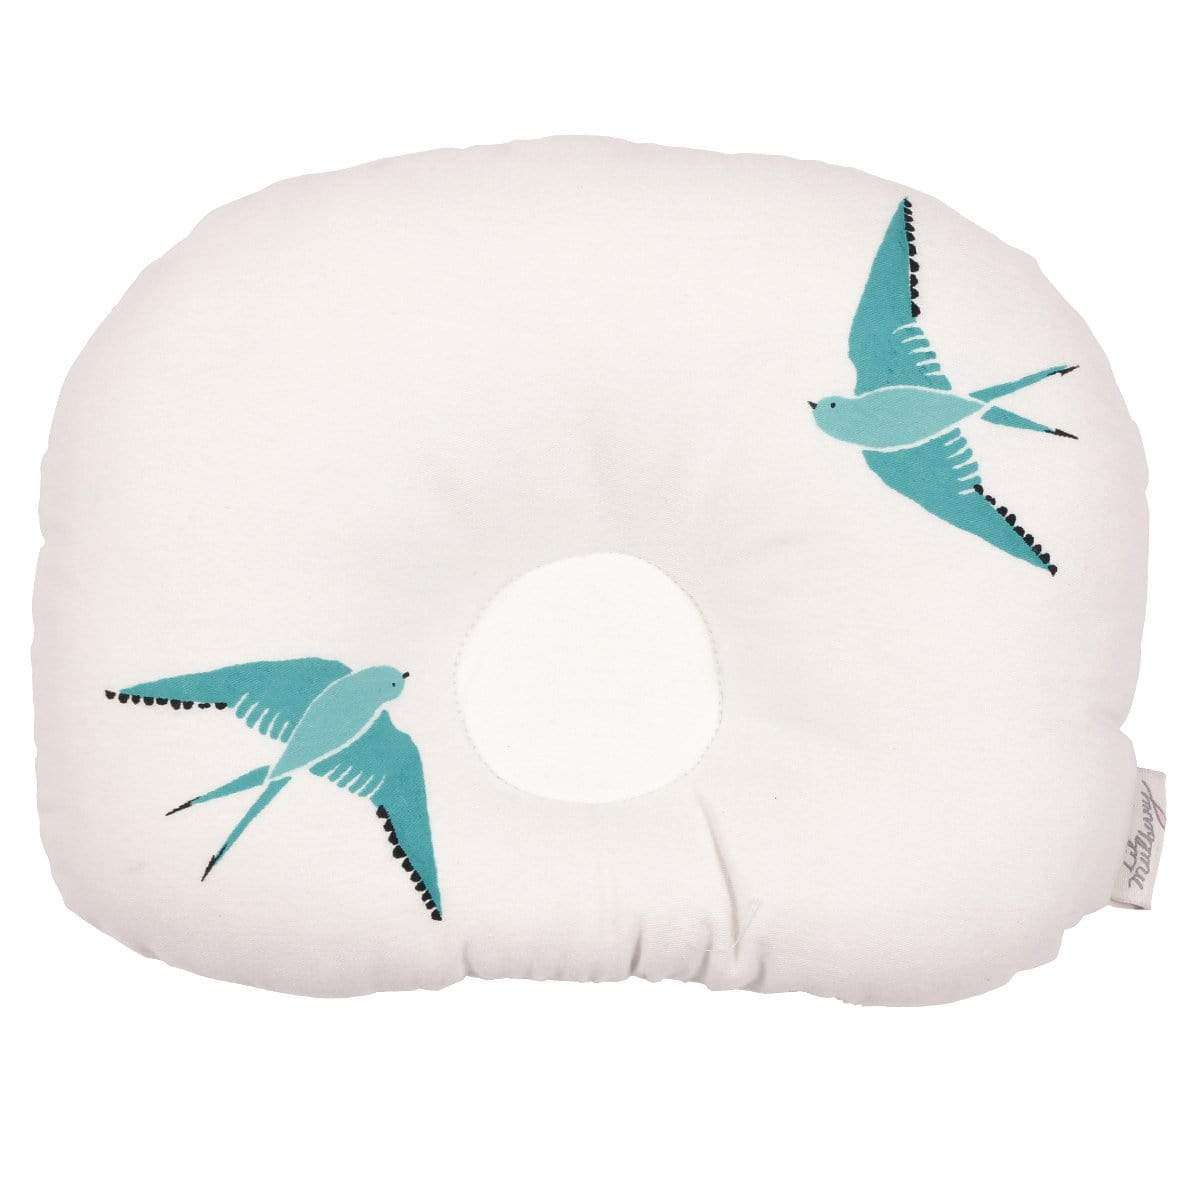 Freebird Infant Pillow - Lil Mulberry